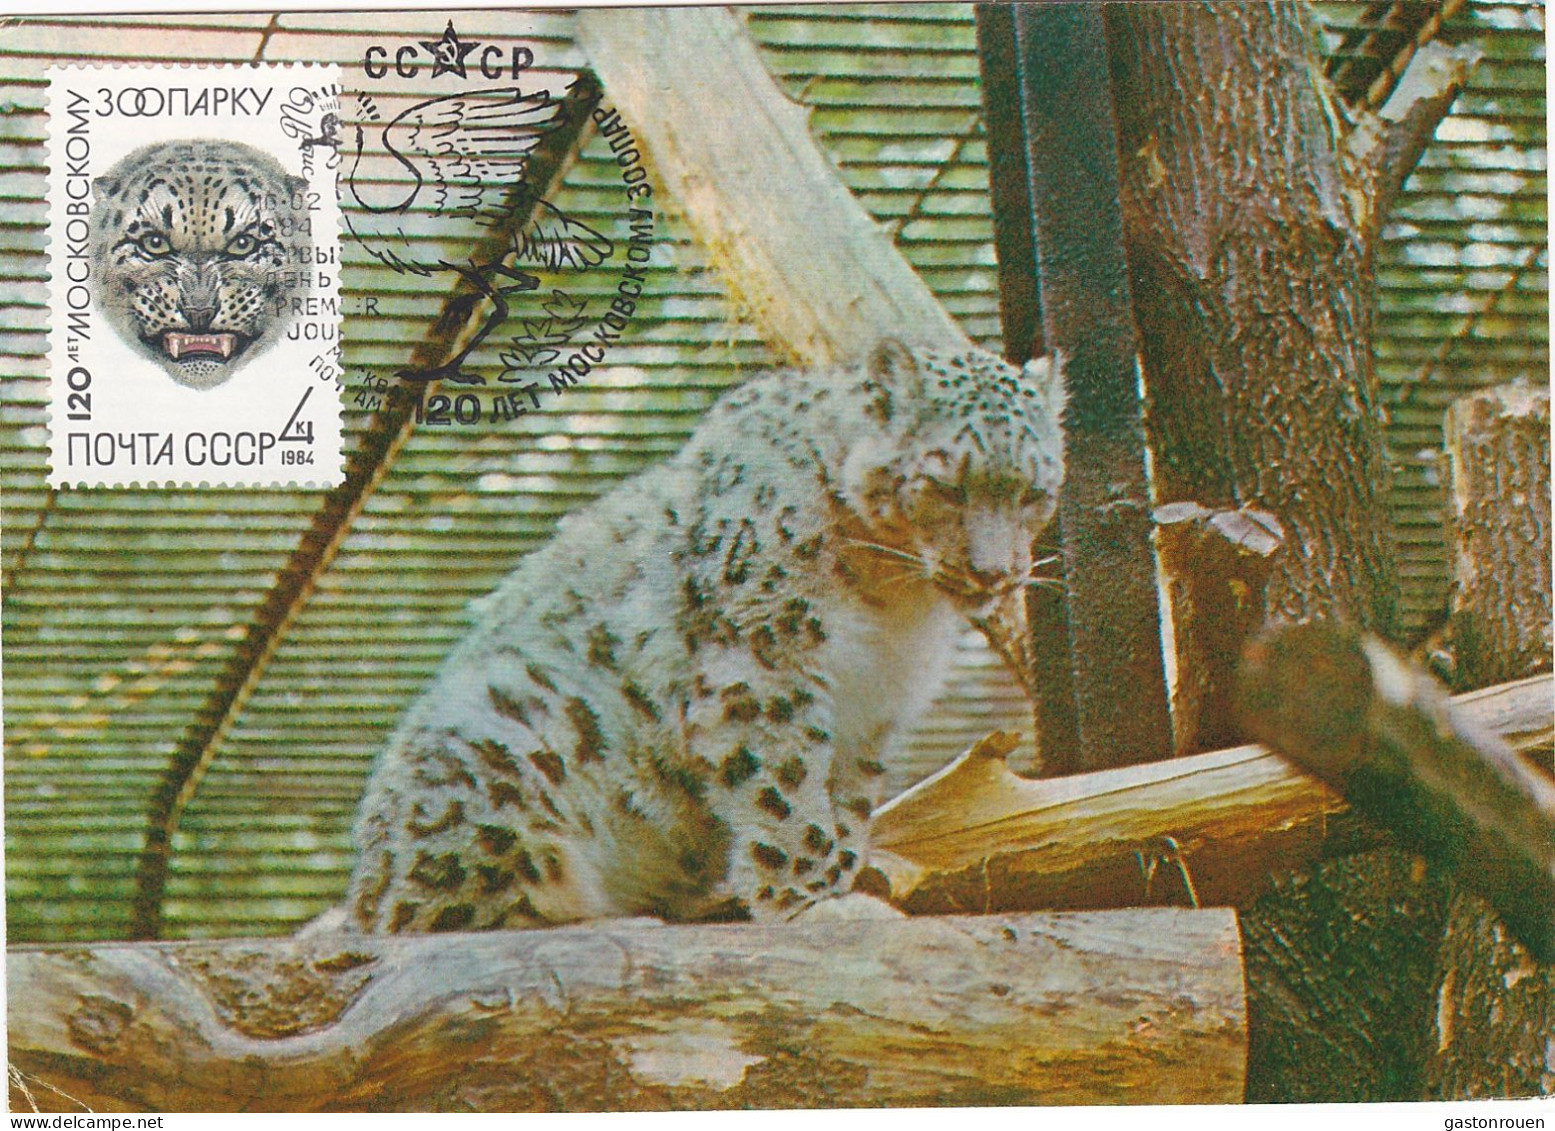 Carte Maximum URSS Russie Russia Félin Feline Léopard Des Neiges Snow Leopard 5077 - Tarjetas Máxima